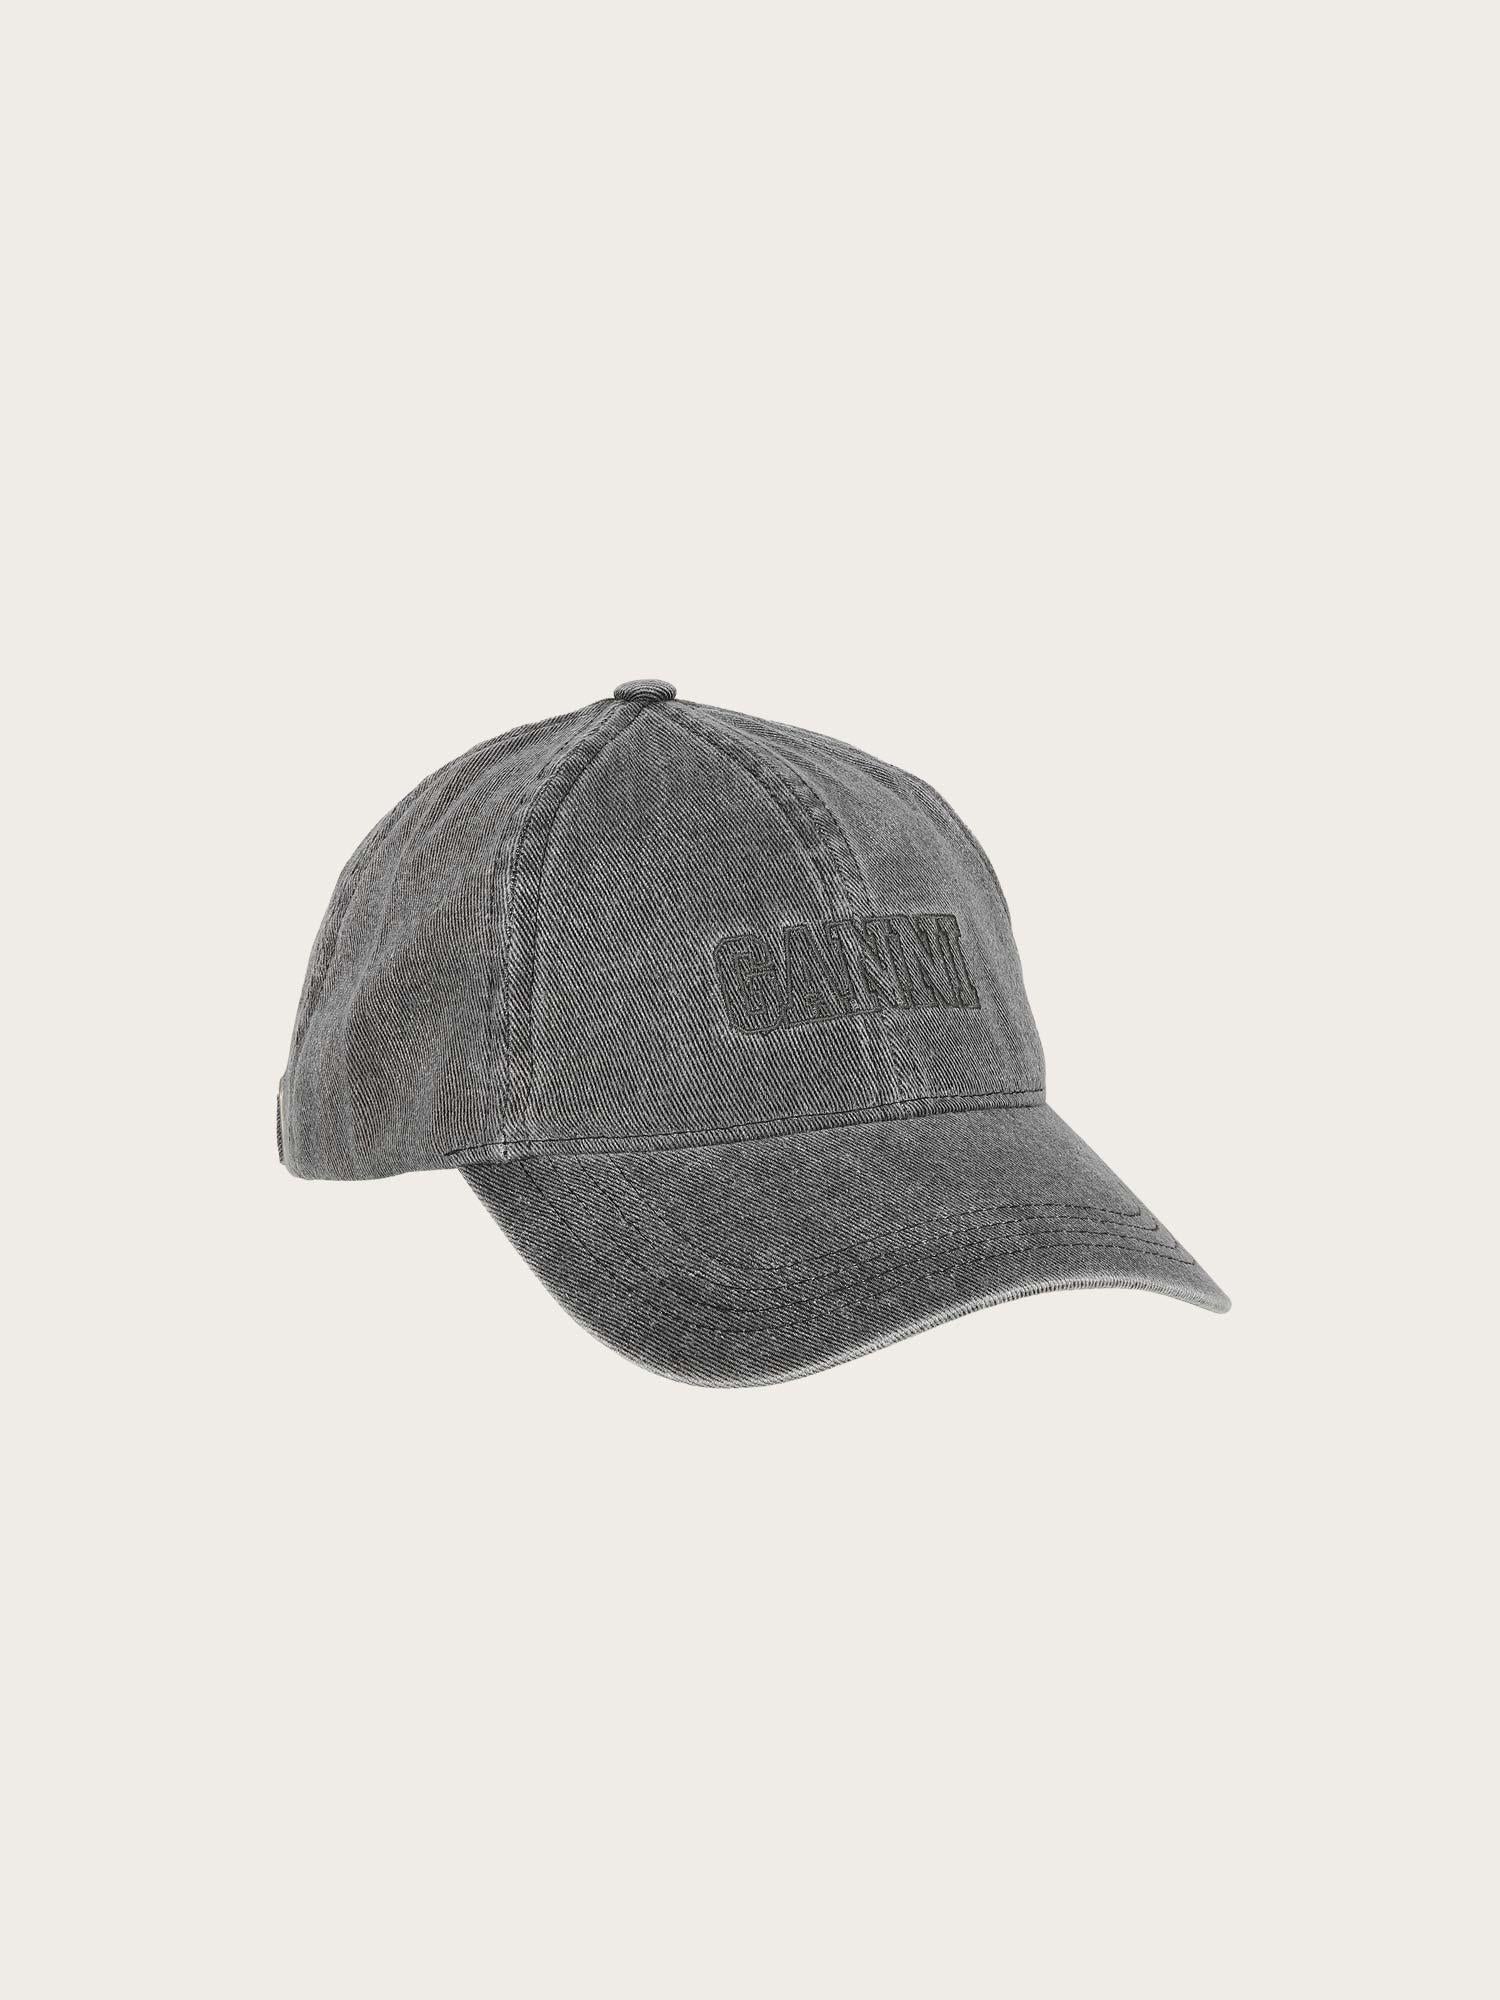 A5759 Cap Hat Denim - Black